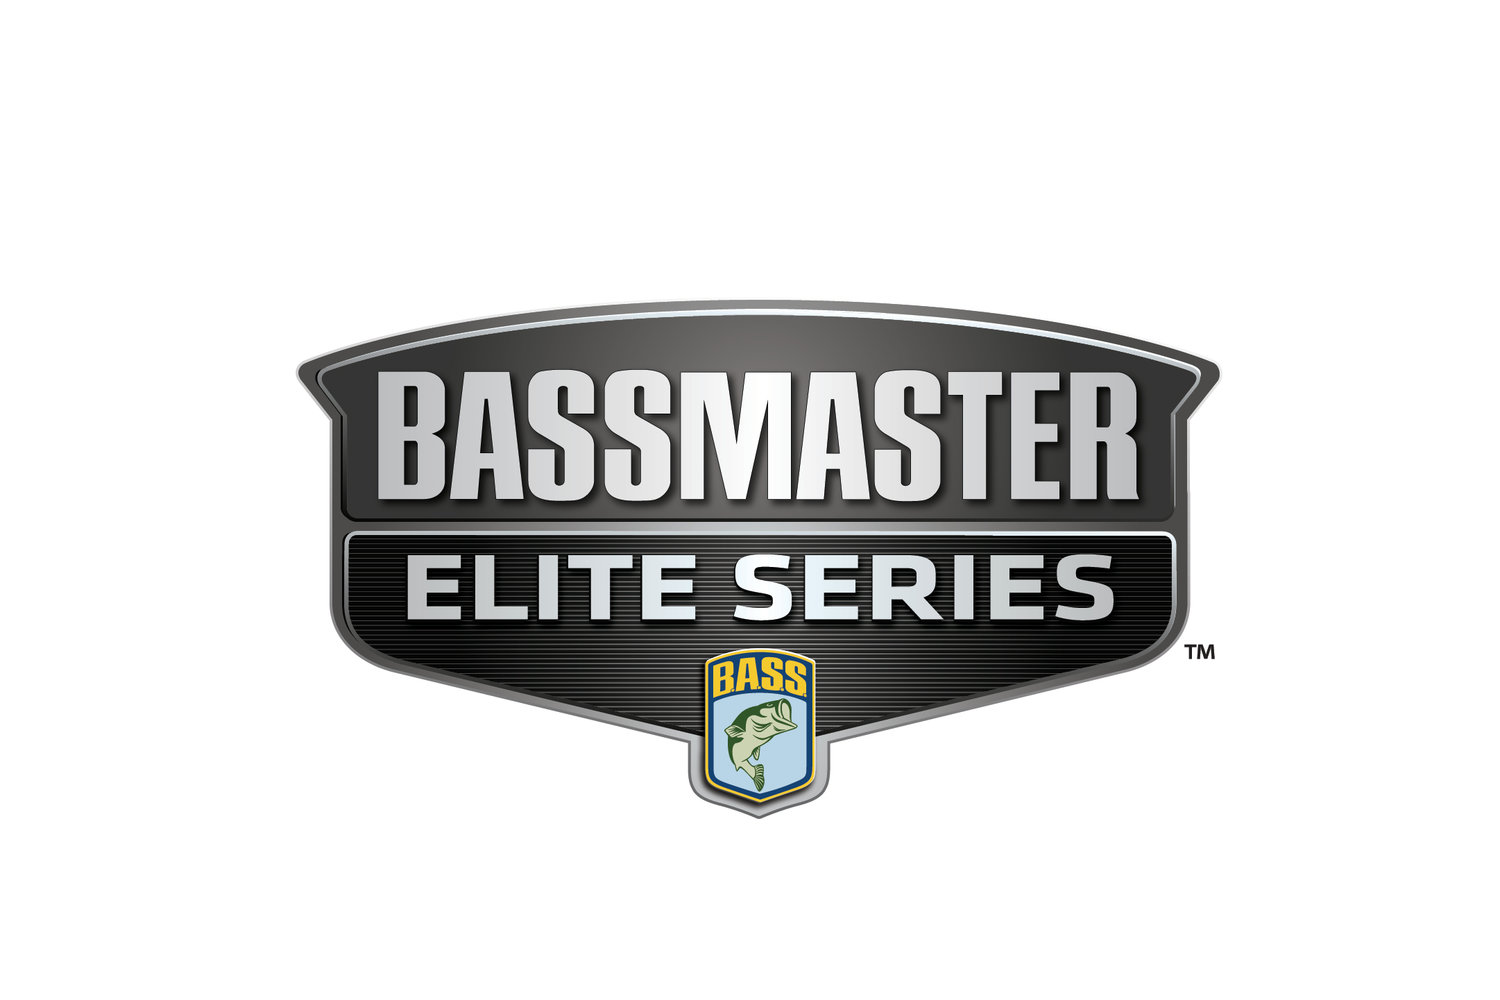 Lake Murray Will Again Play Host to Bassmaster Elite Series